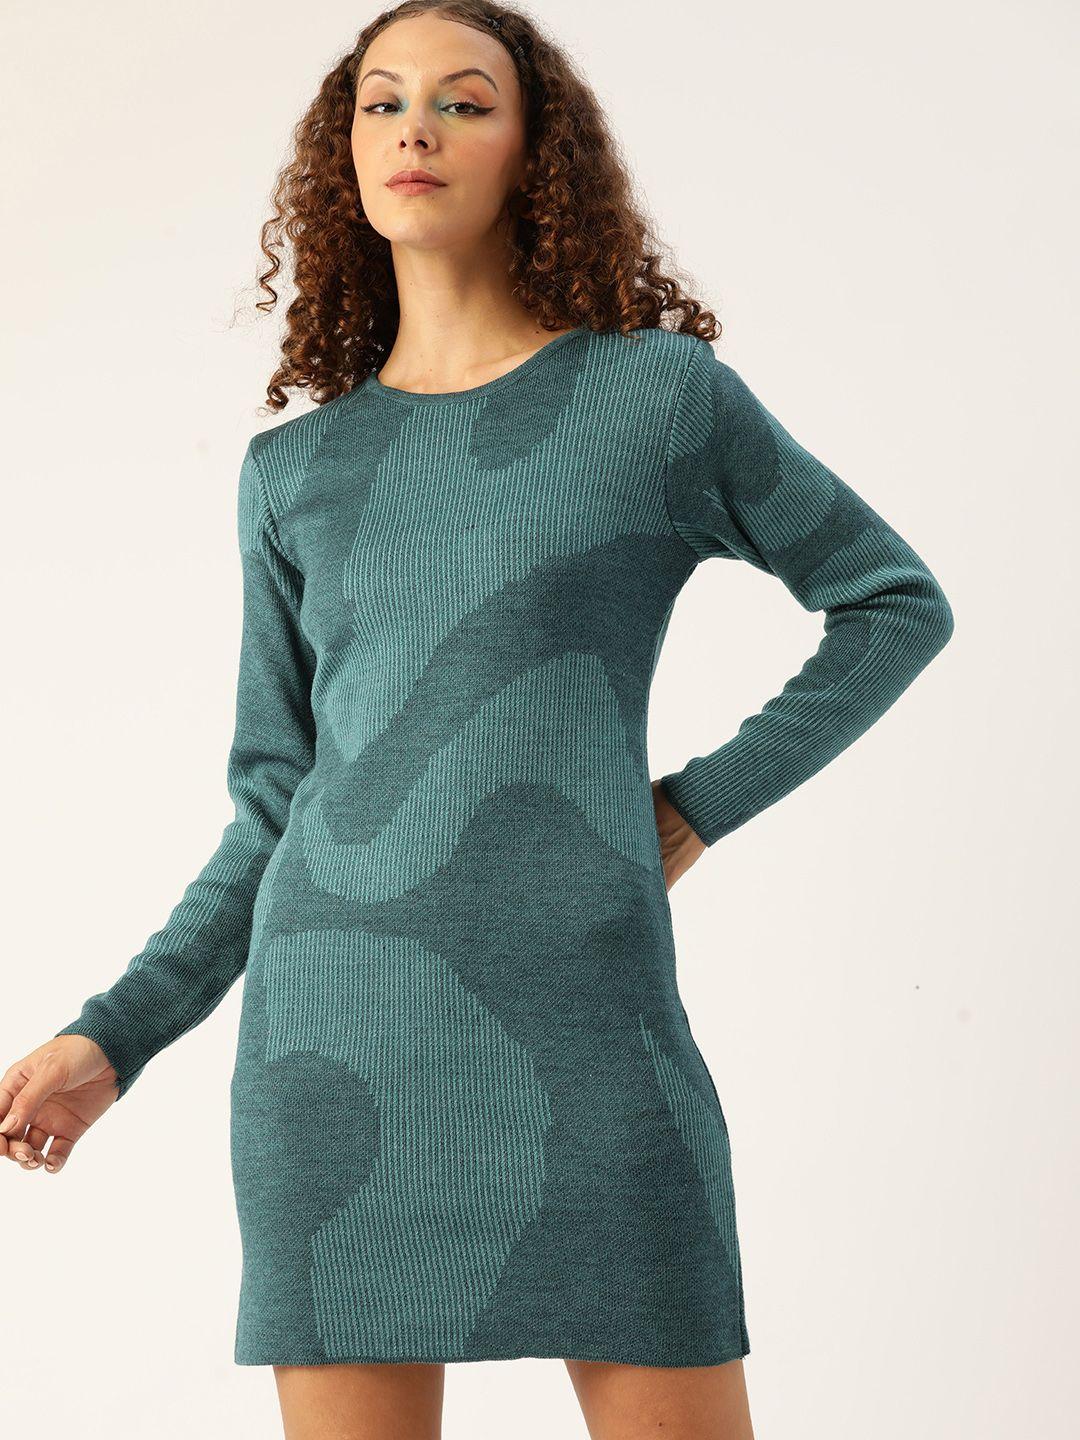 kook n keech women teal green self-design acrylic sweater dress